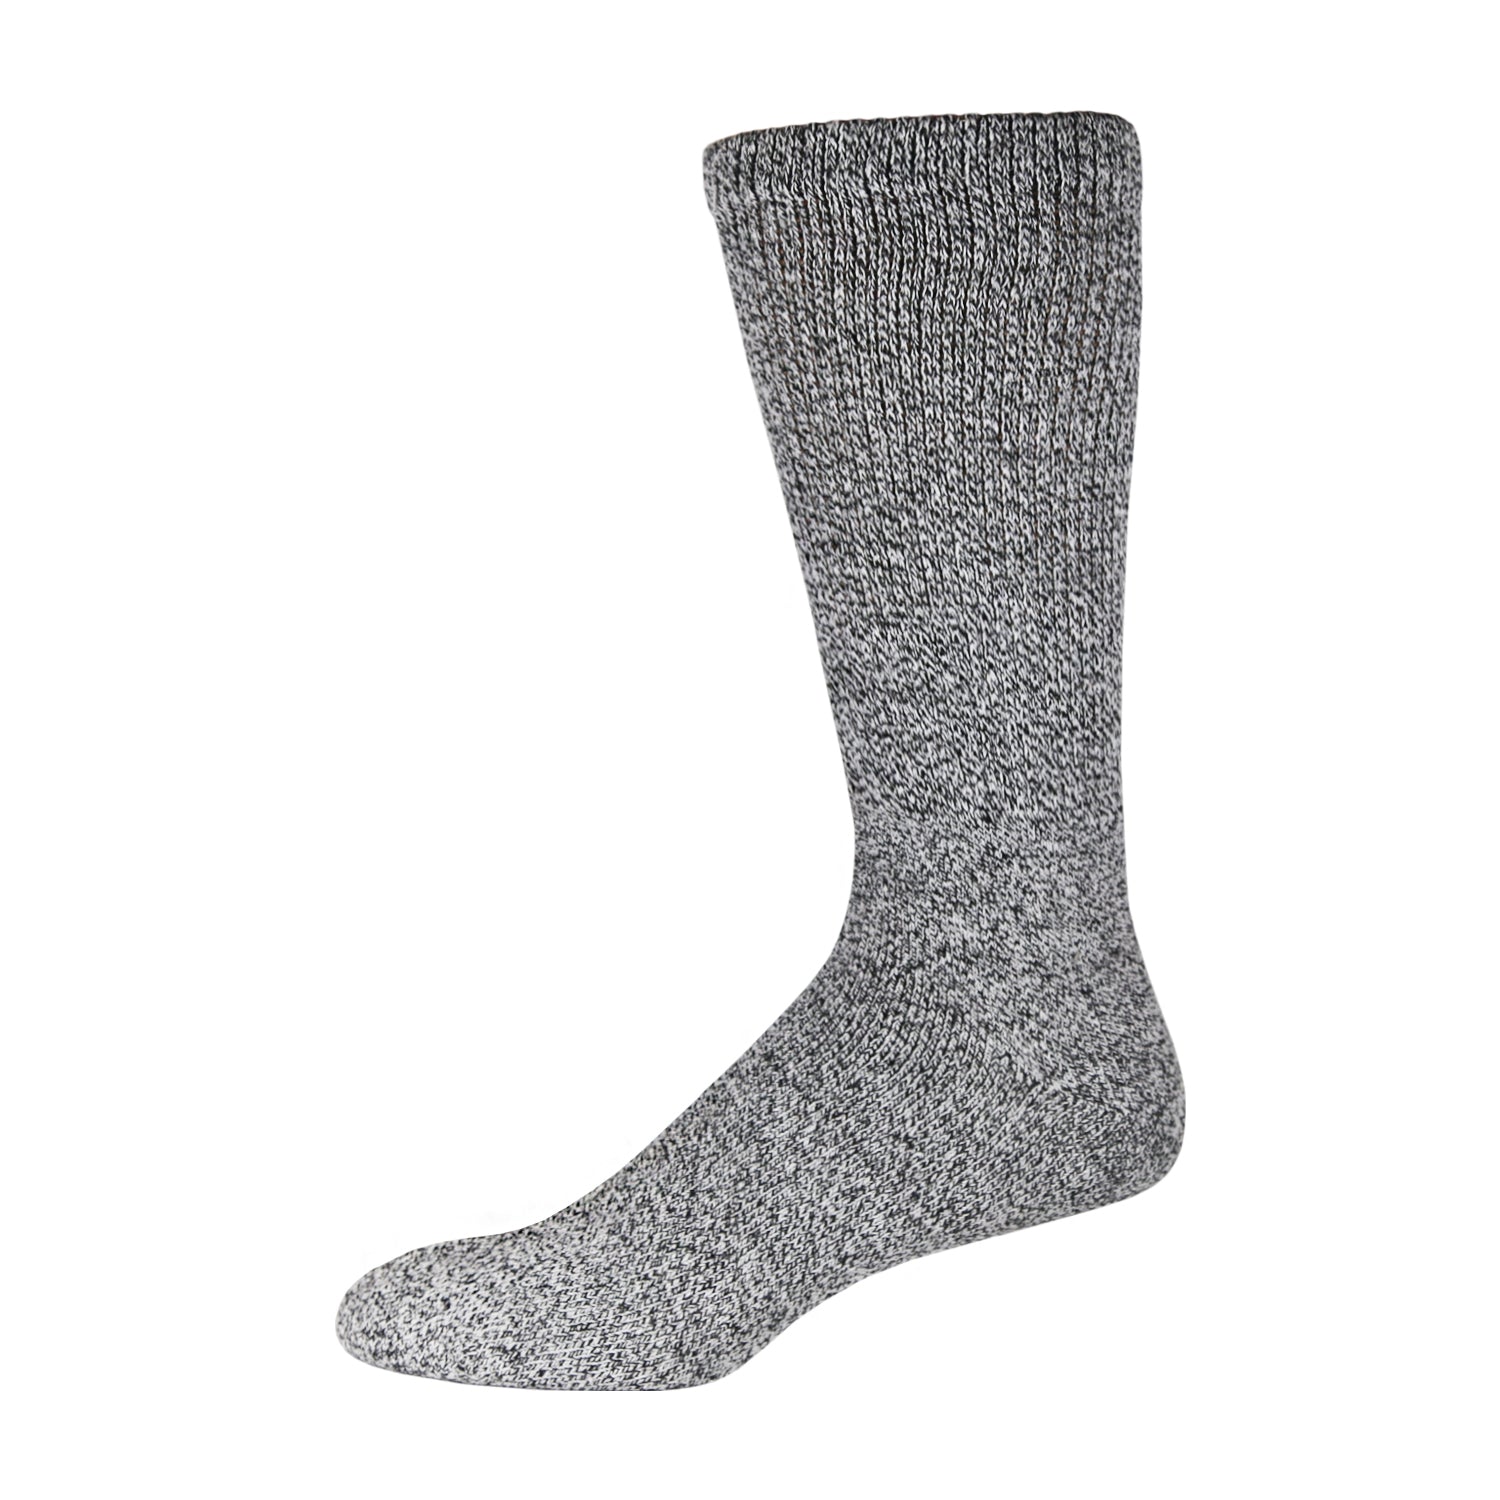 Dark Gray Marled Crew Sock For Diabetics